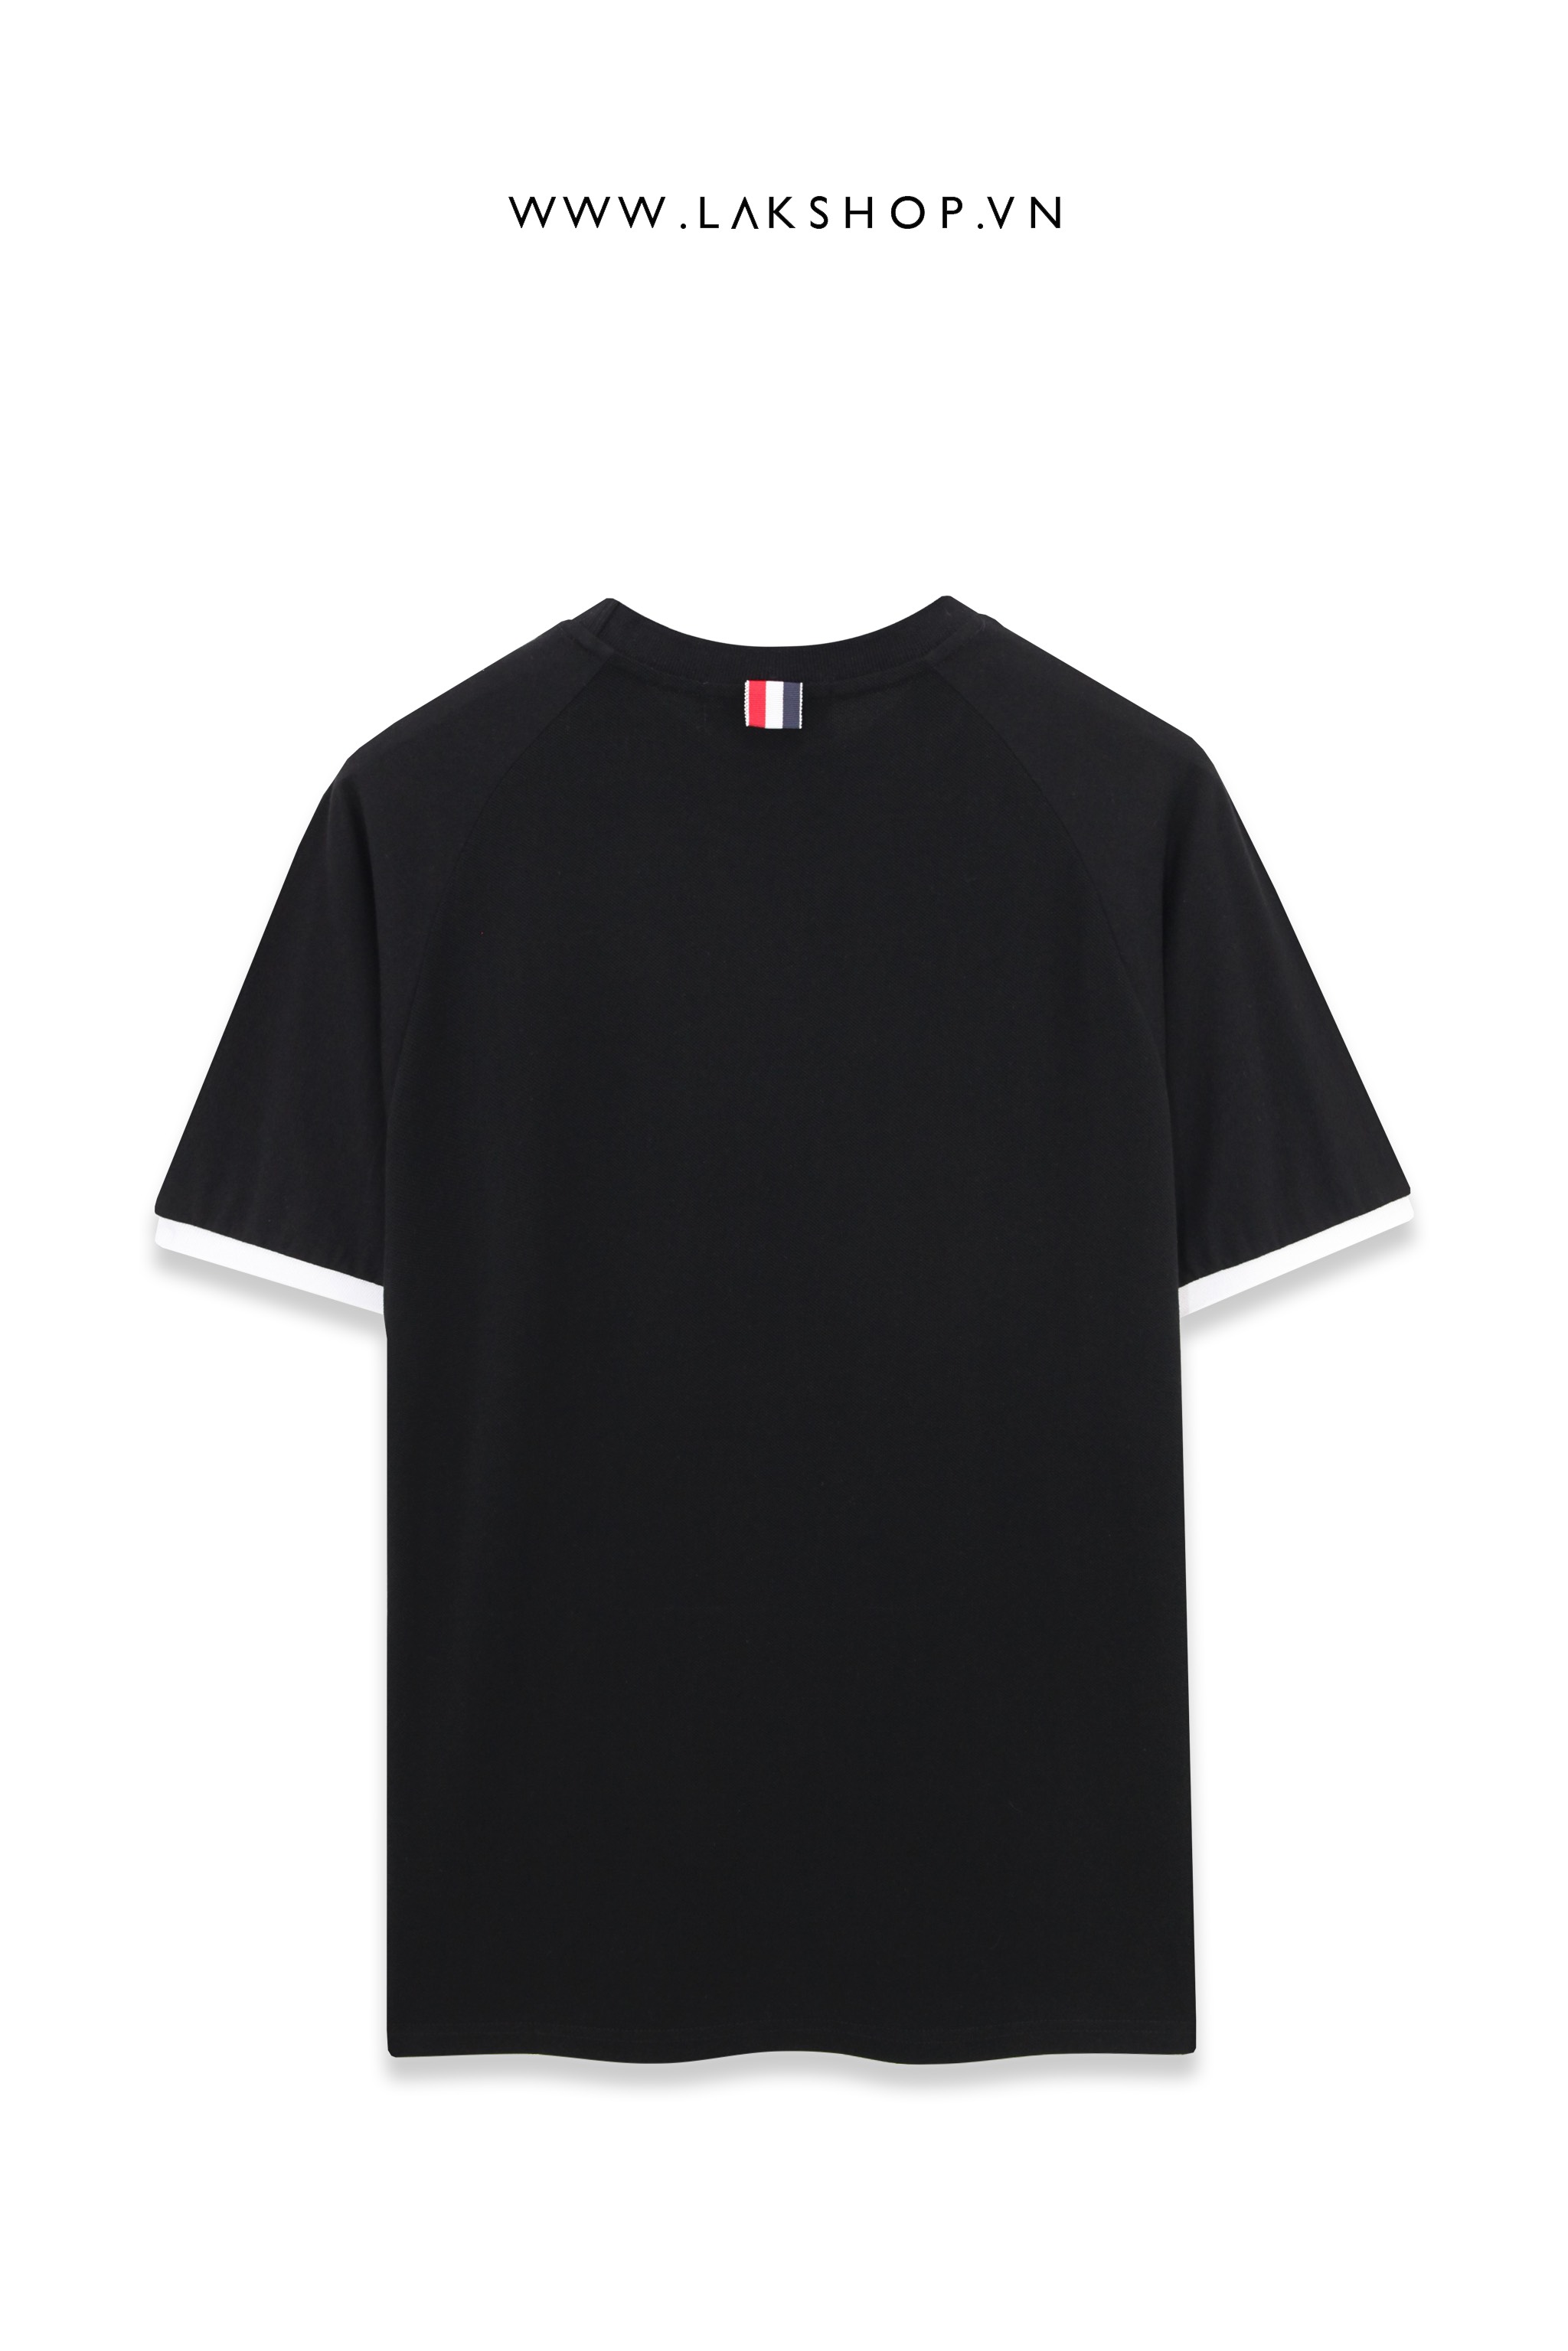 Thom Browne Striped Shoulder in Black T-Shirt